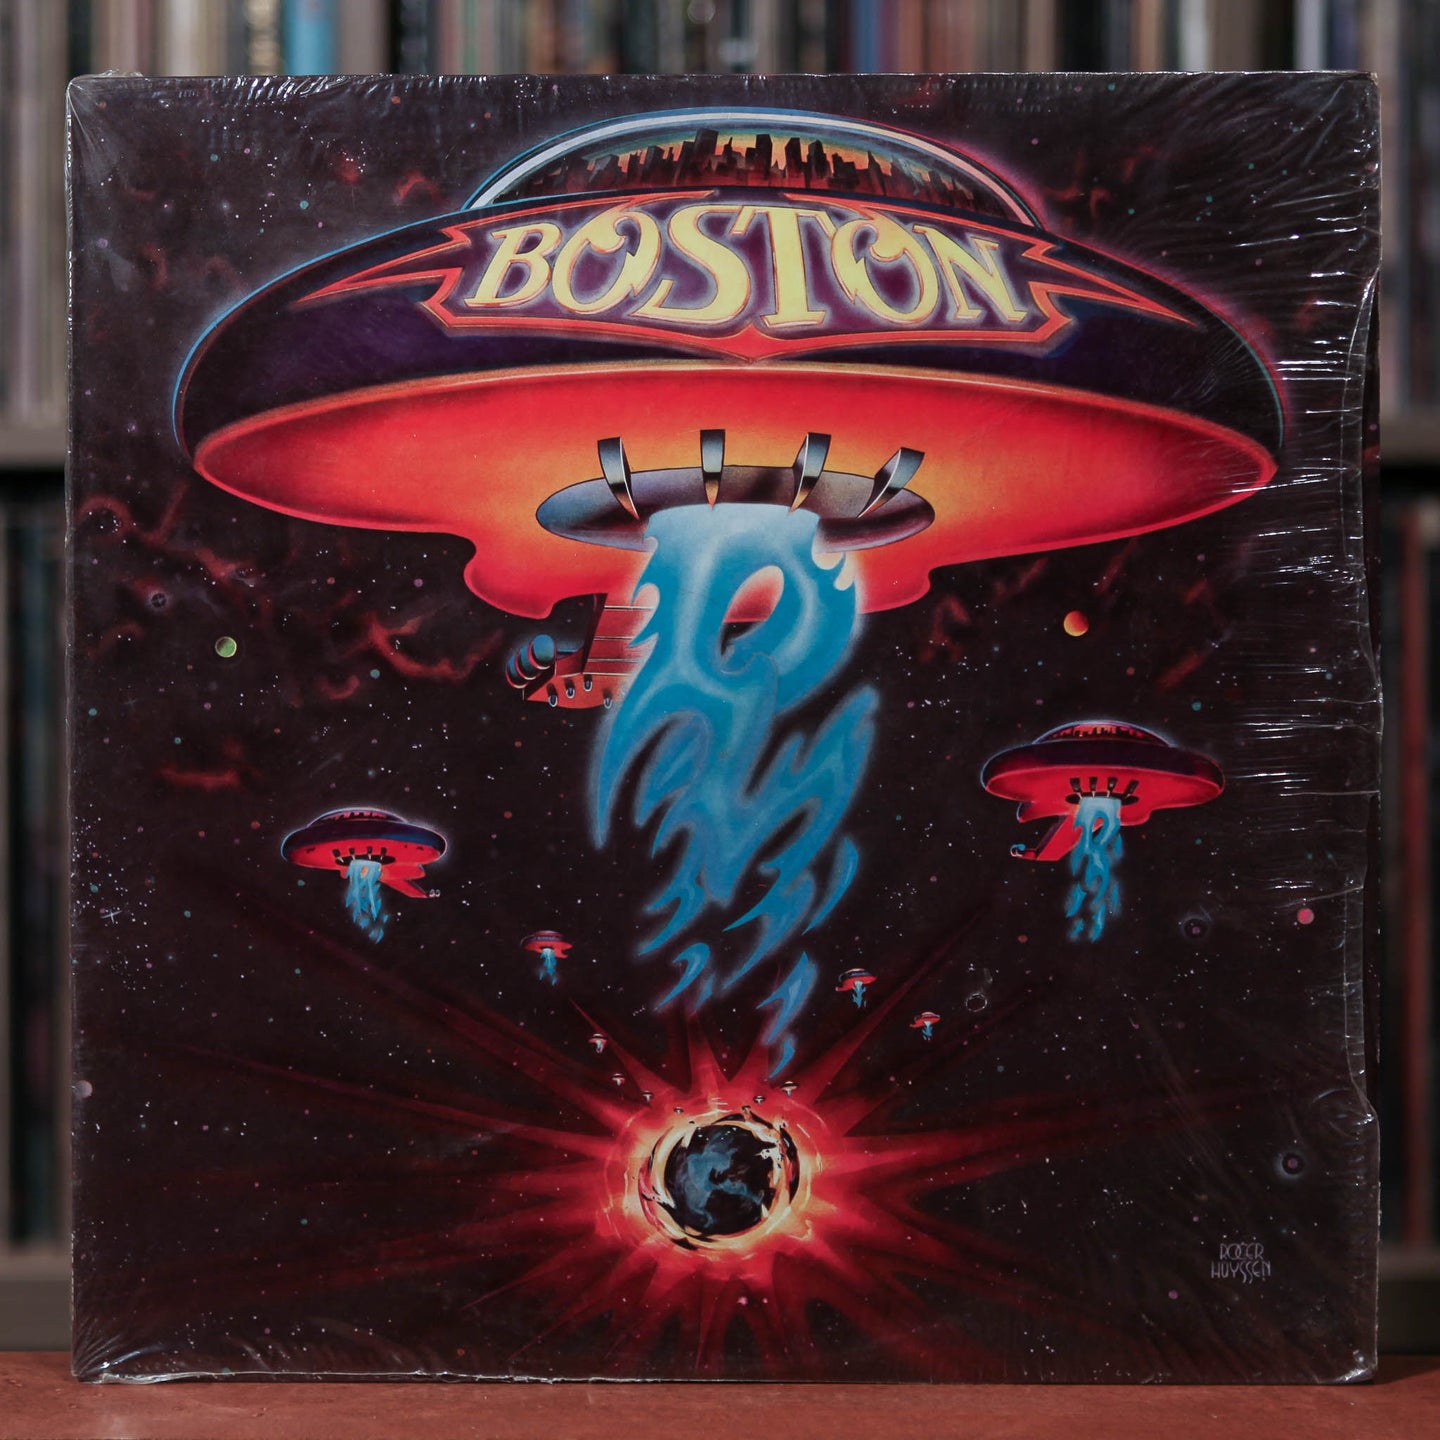 Boston - Self-Titled - 1976 Epic, EX/VG w/Shrink